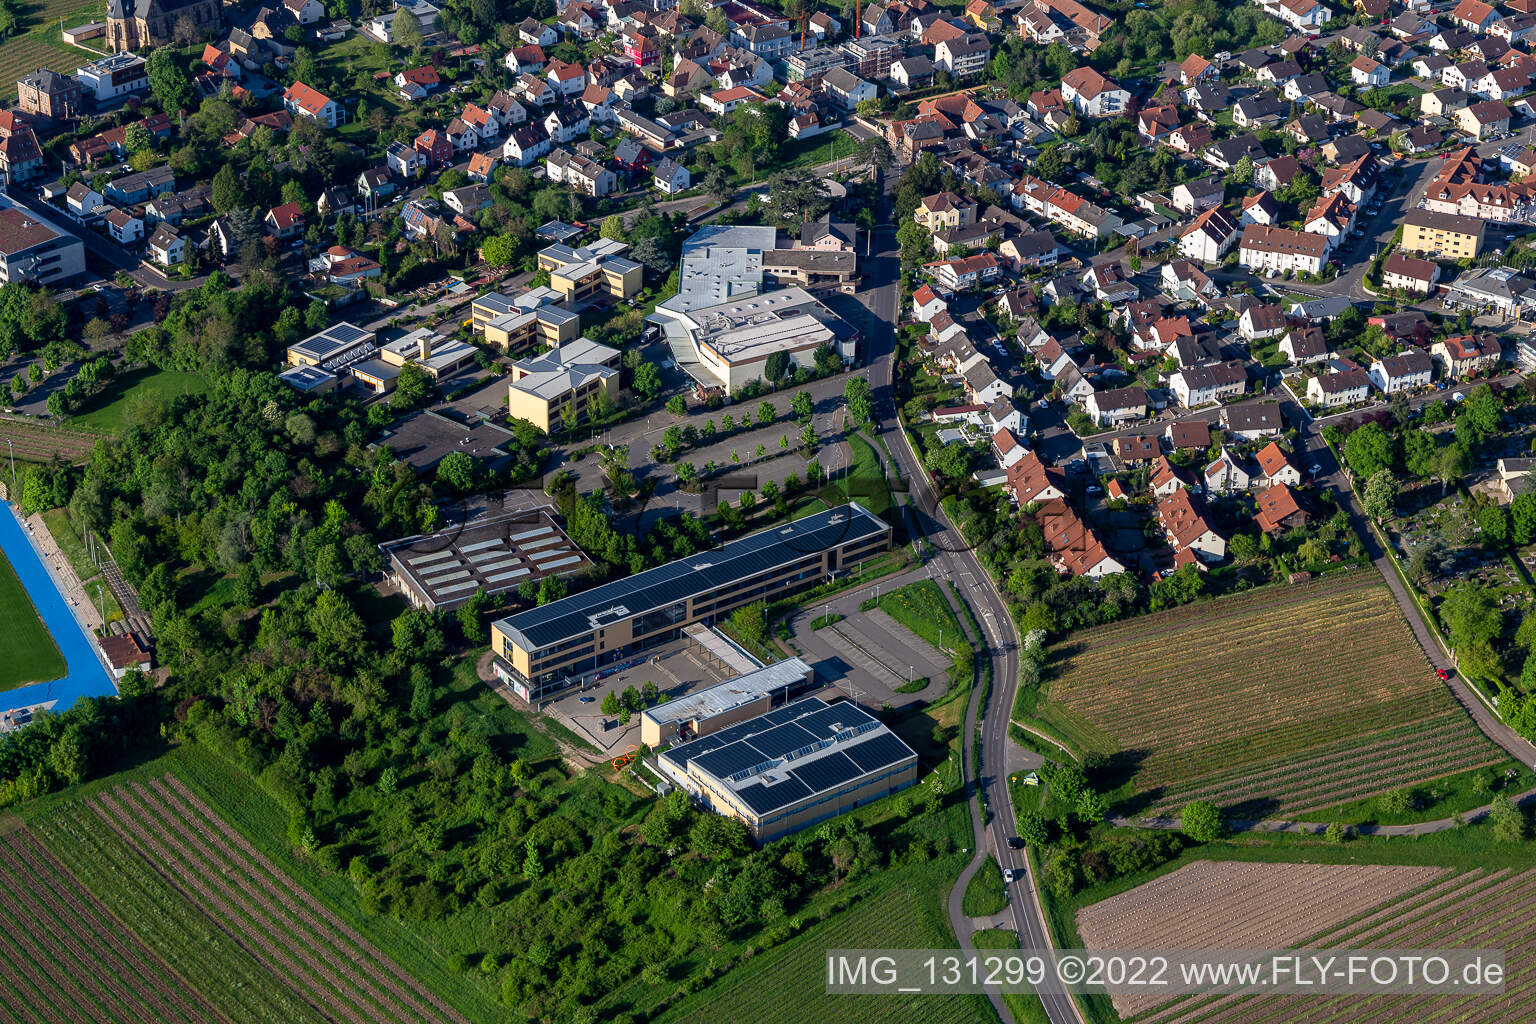 Edenkoben High School in Maikammer in the state Rhineland-Palatinate, Germany